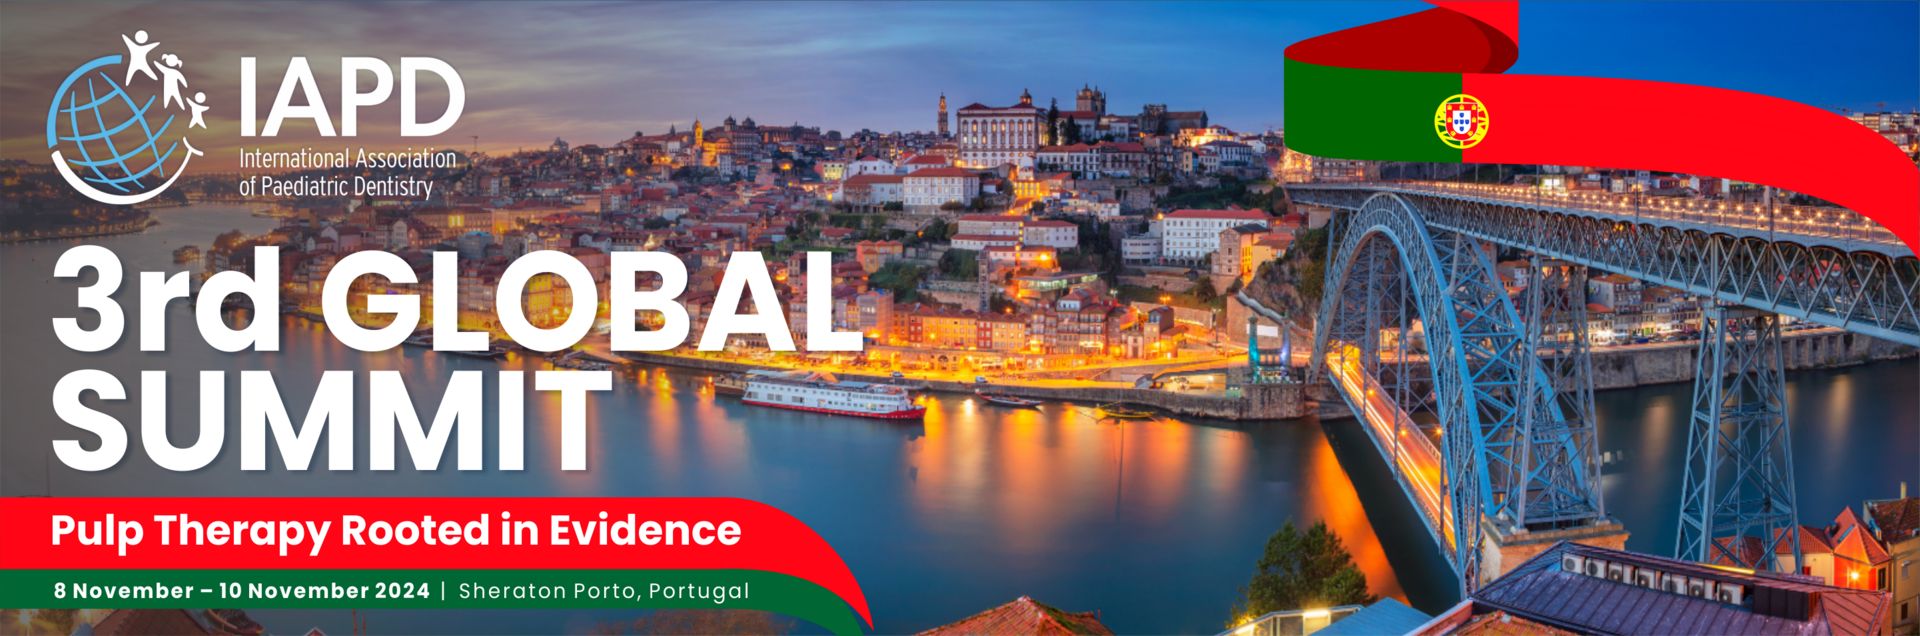 3rd Global Summit of IAPD 2024, Porto, Portugal